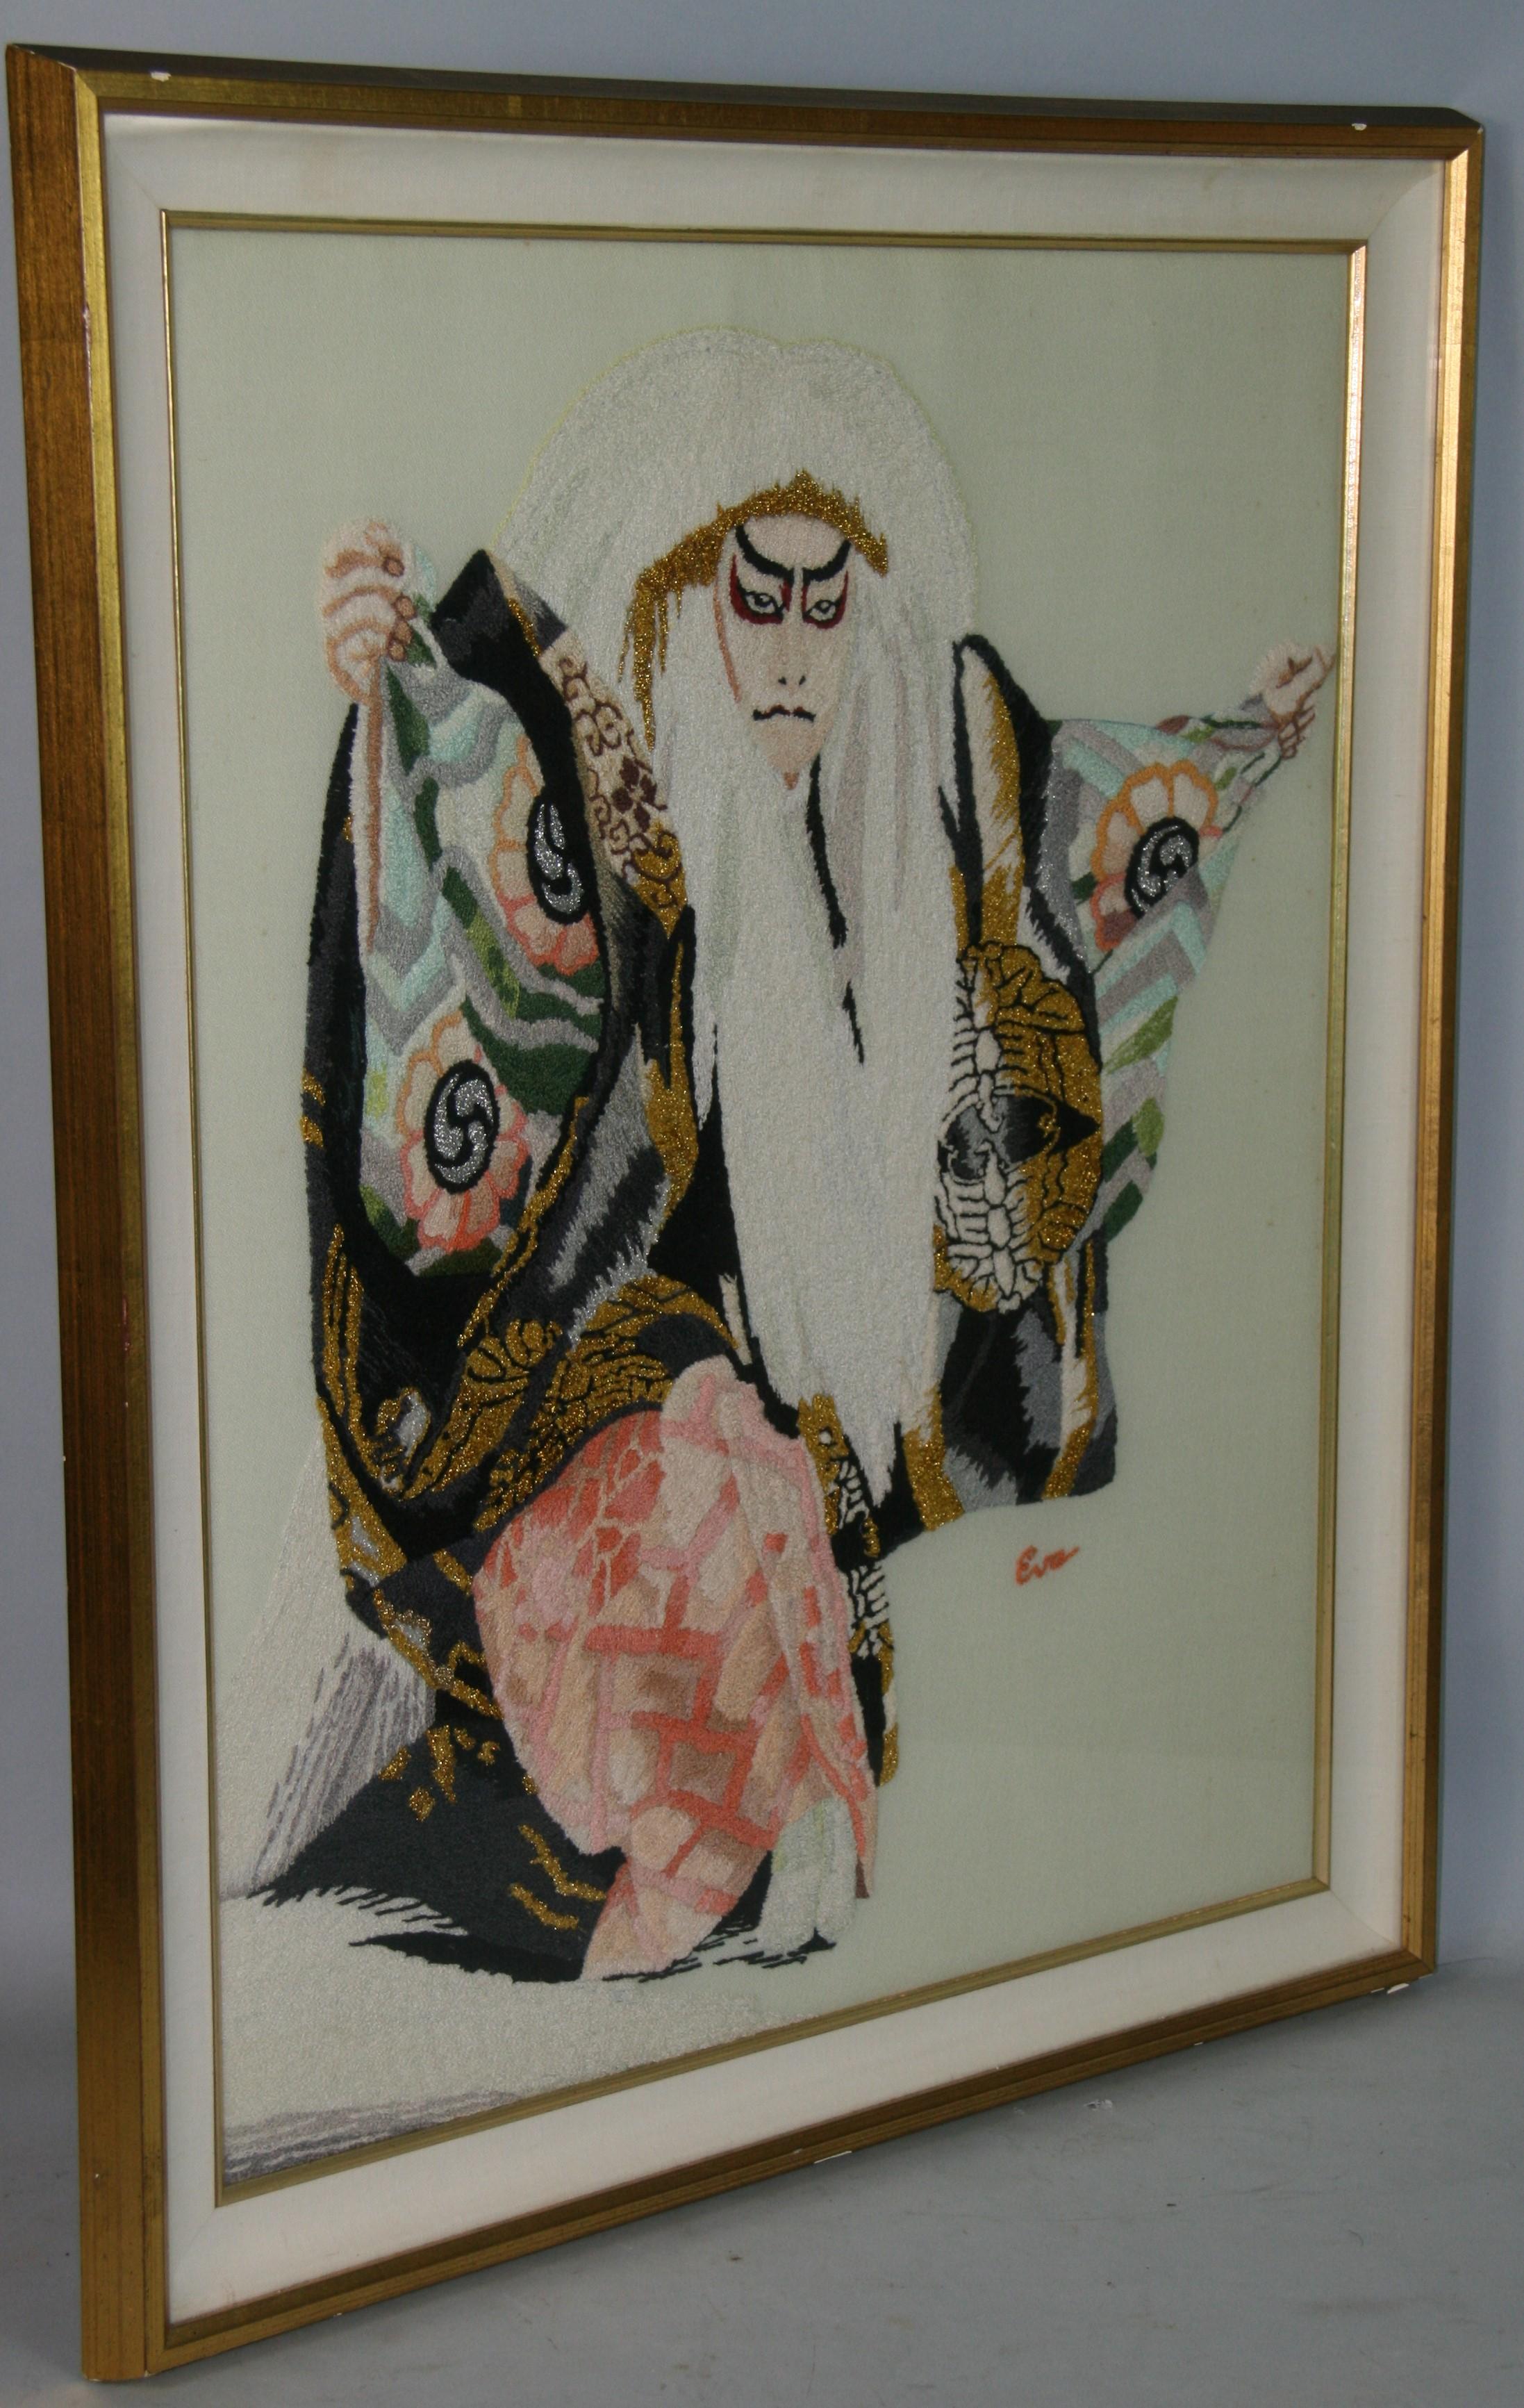 5068 Japanese Kabuki dancer hand made wall tapestry 
signed Eva
Set in a custom made frame